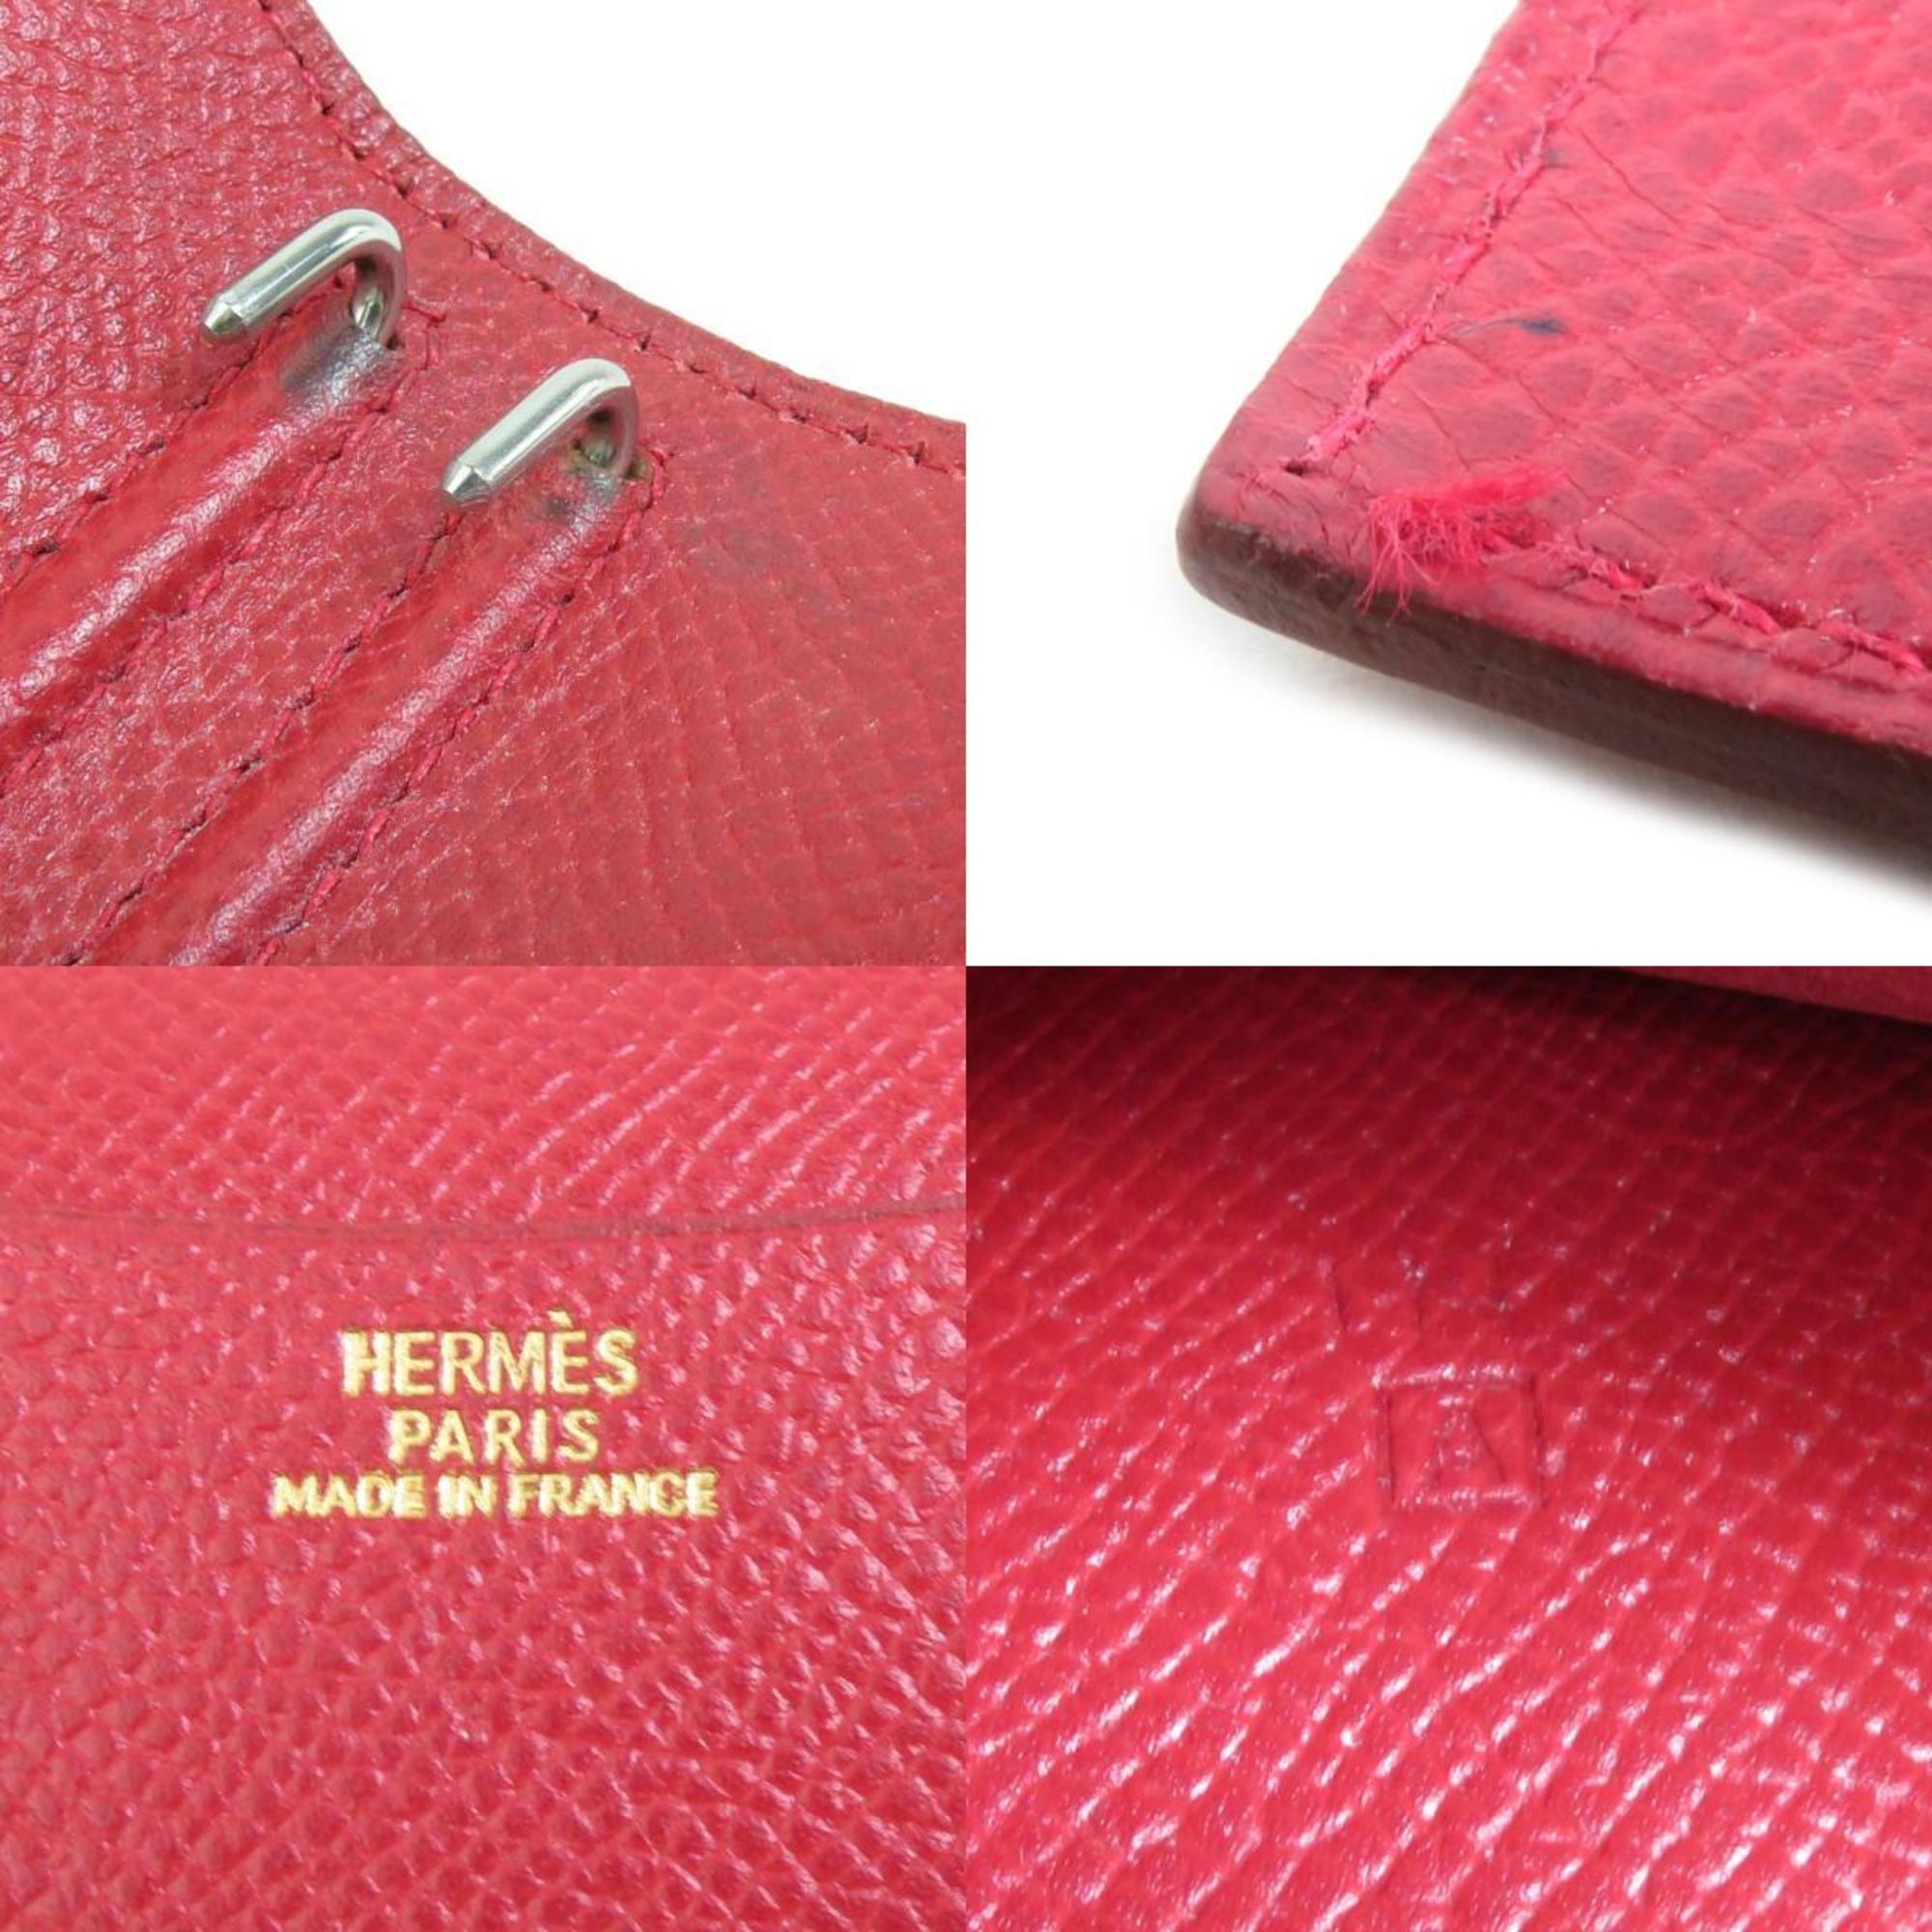 Hermes HERMES Notebook Cover Leather Dark Red Women's e58628f